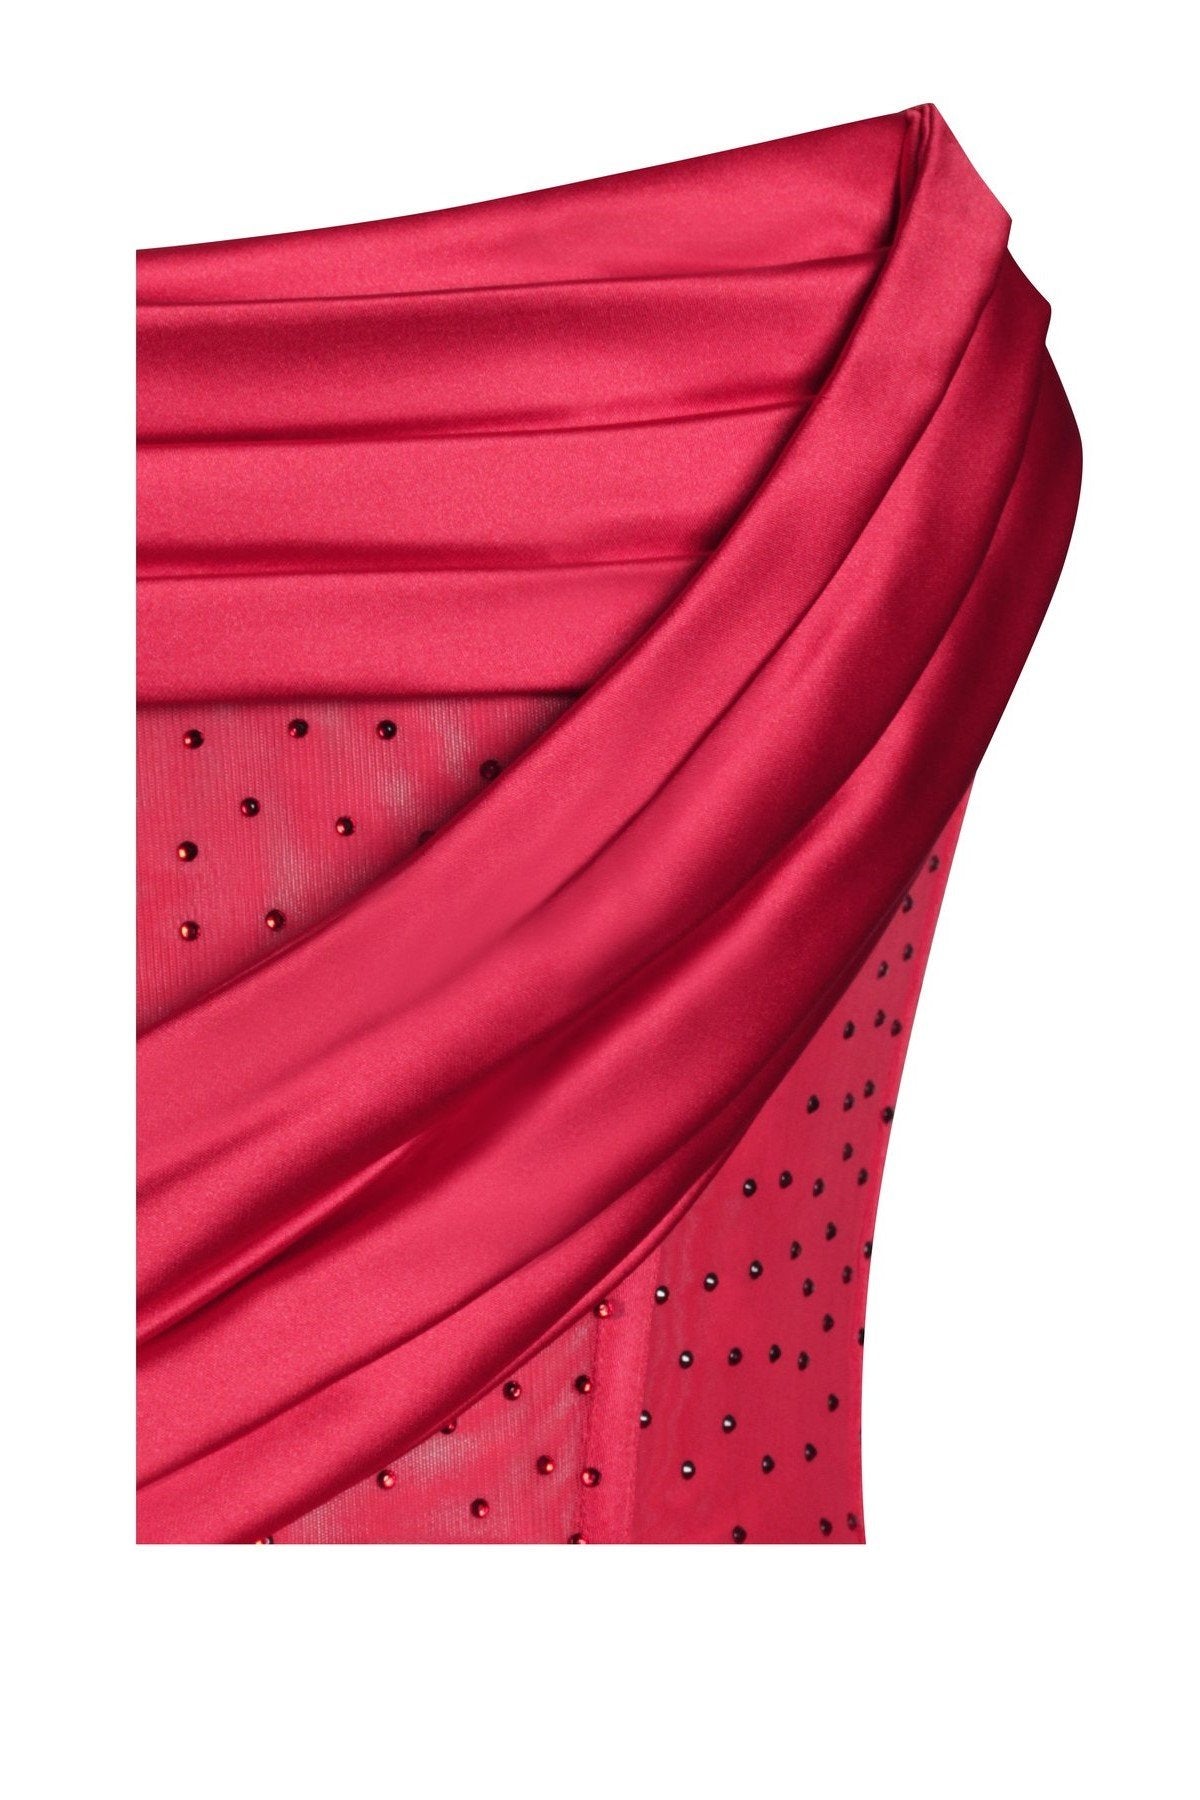 Haliya Crystallized Corset High Slit Gown - Red - Bellabarnett